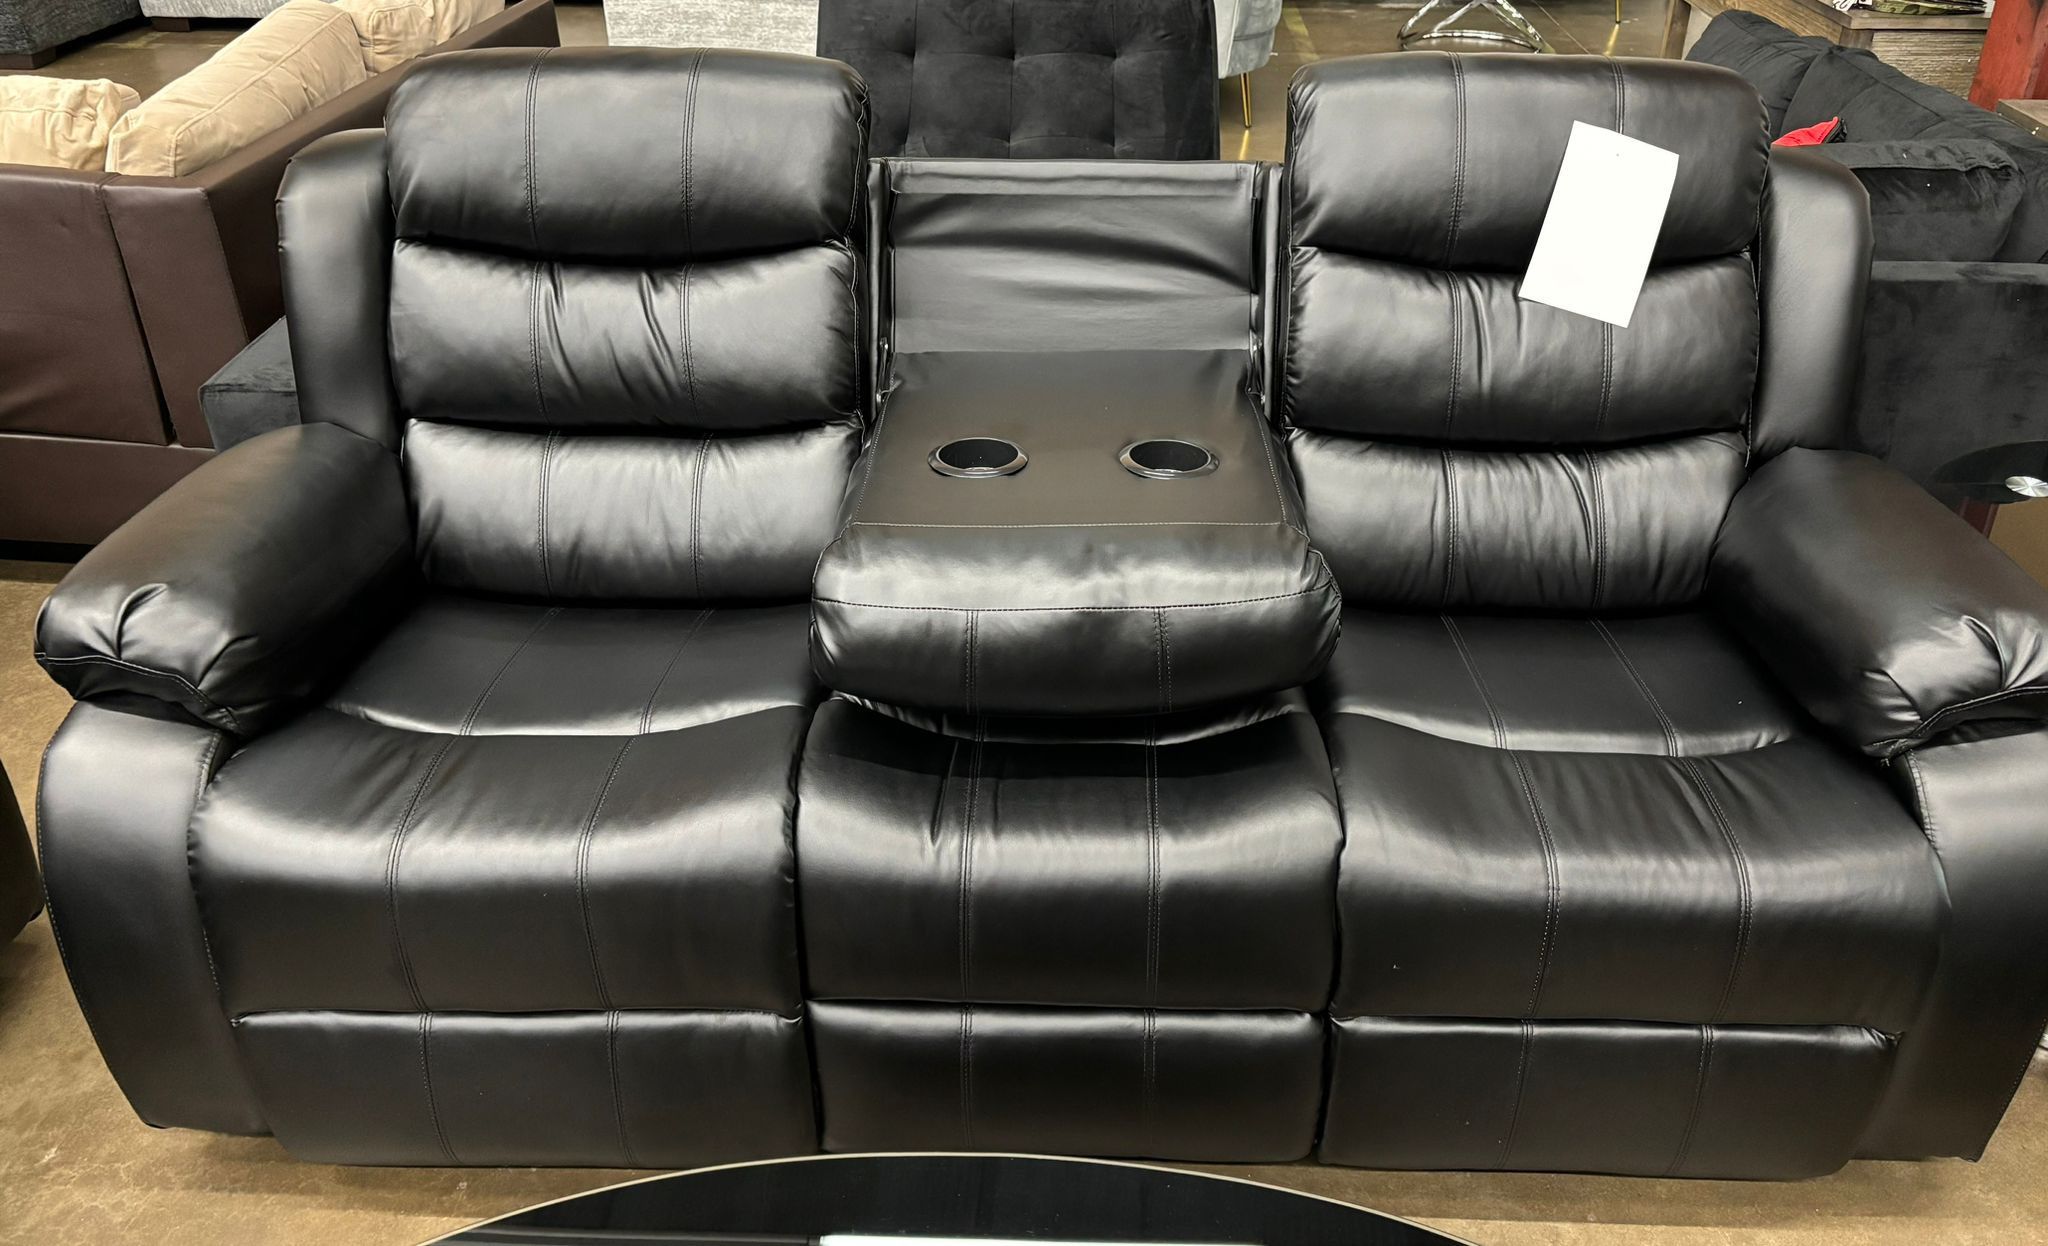 New Sofas For $999